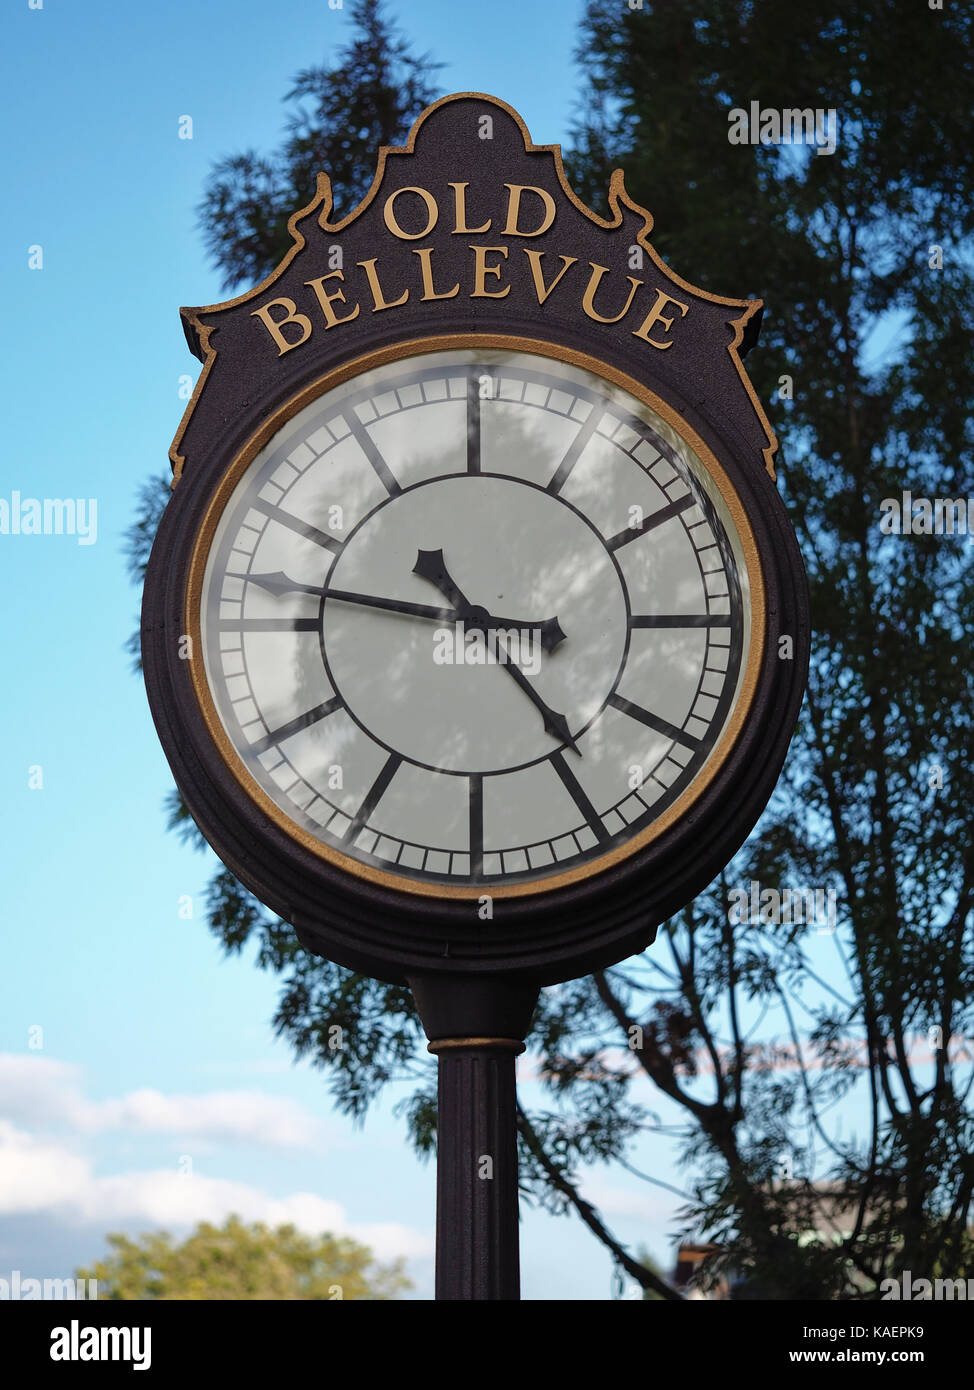 Street clock in Old Bellevue part of Bellevue city, WA, USA Stock Photo